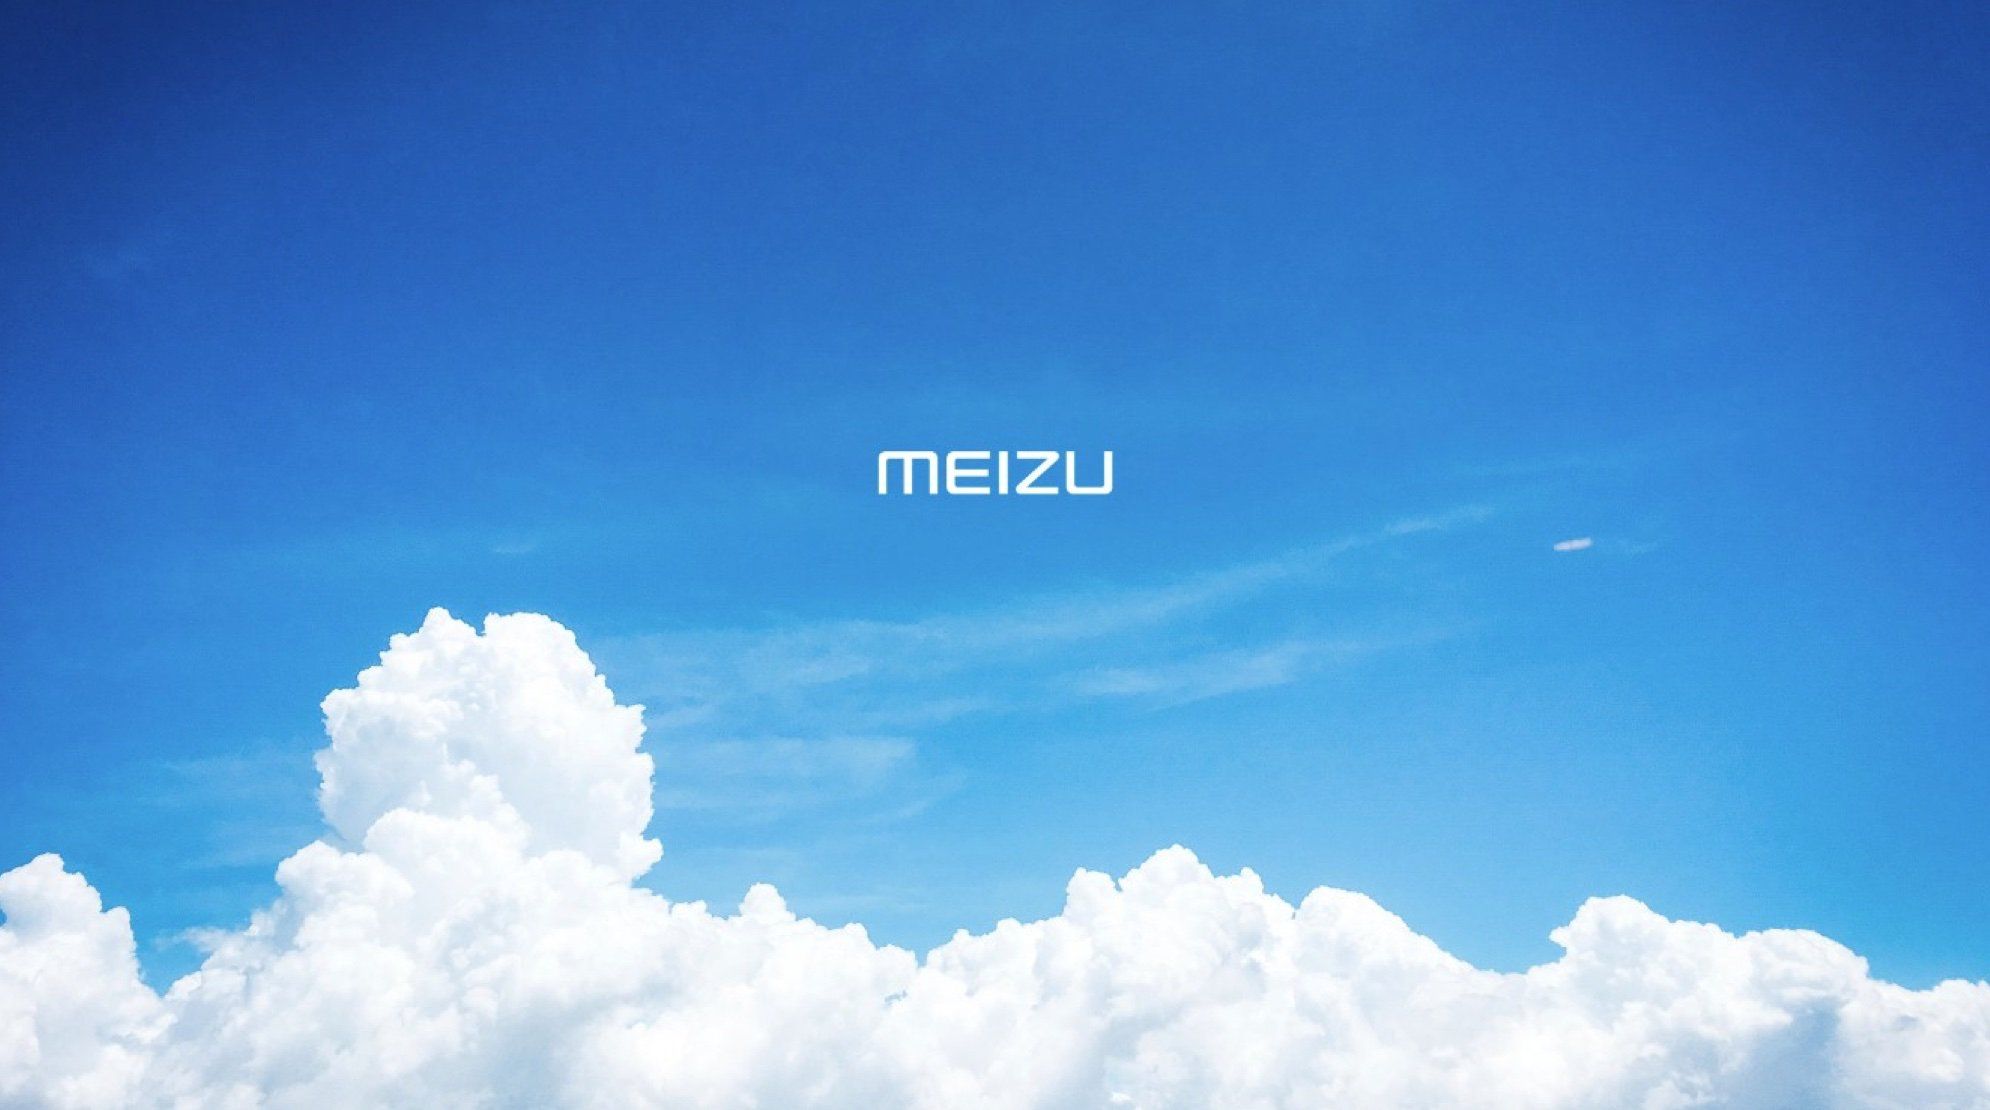 Meizuがロゴの色を変更、新しい時代に向けて永遠に夢を追い求める気持ちを象徴